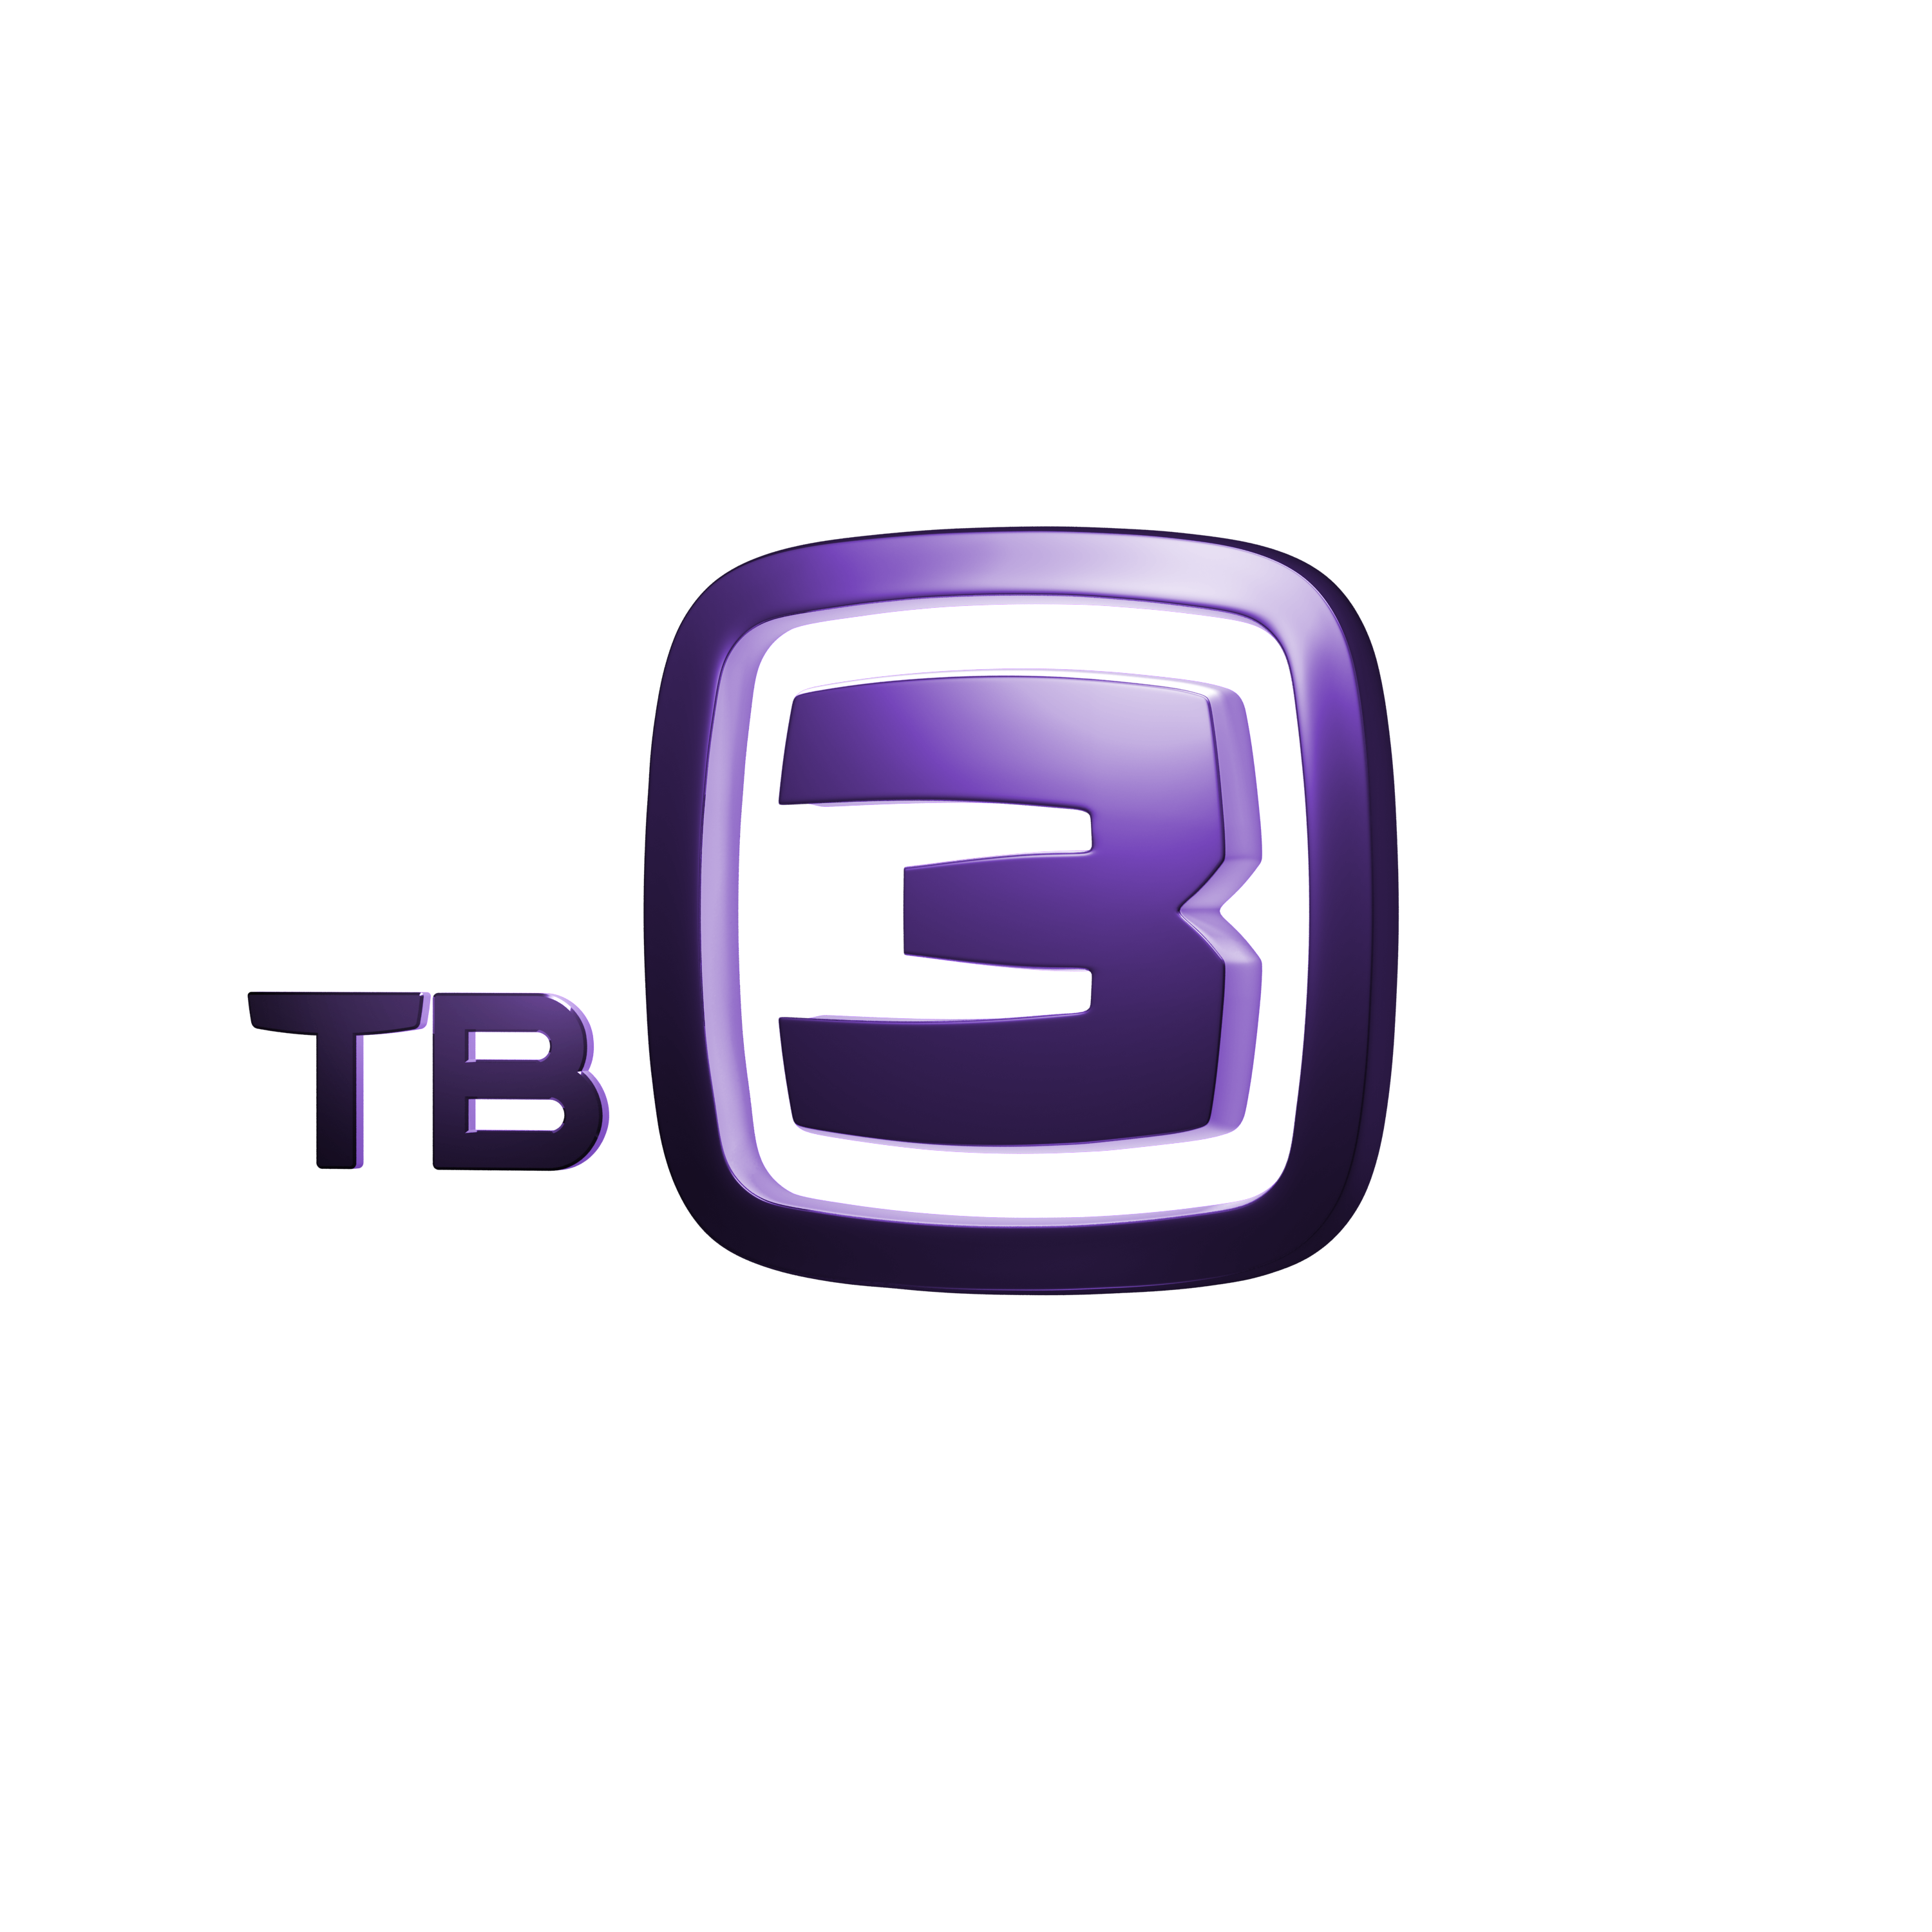 Tv 3 life. Тв3 Телеканал логотип. Канал тв3. Эмблема канала тв3. Тв3 логотип 2015.